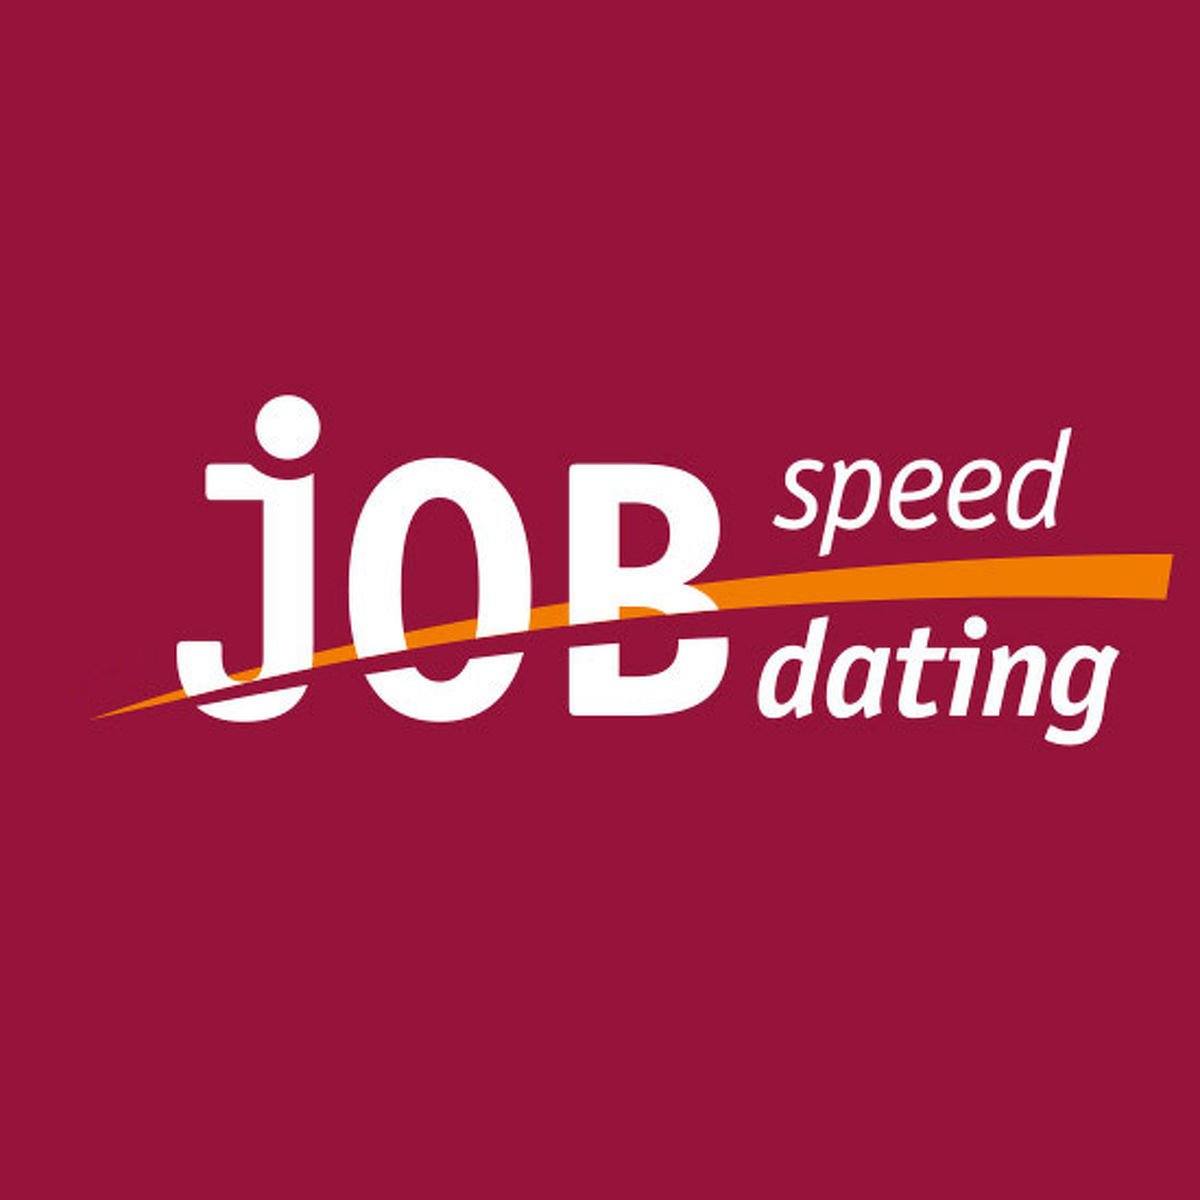 job speed dating nyc 20-30